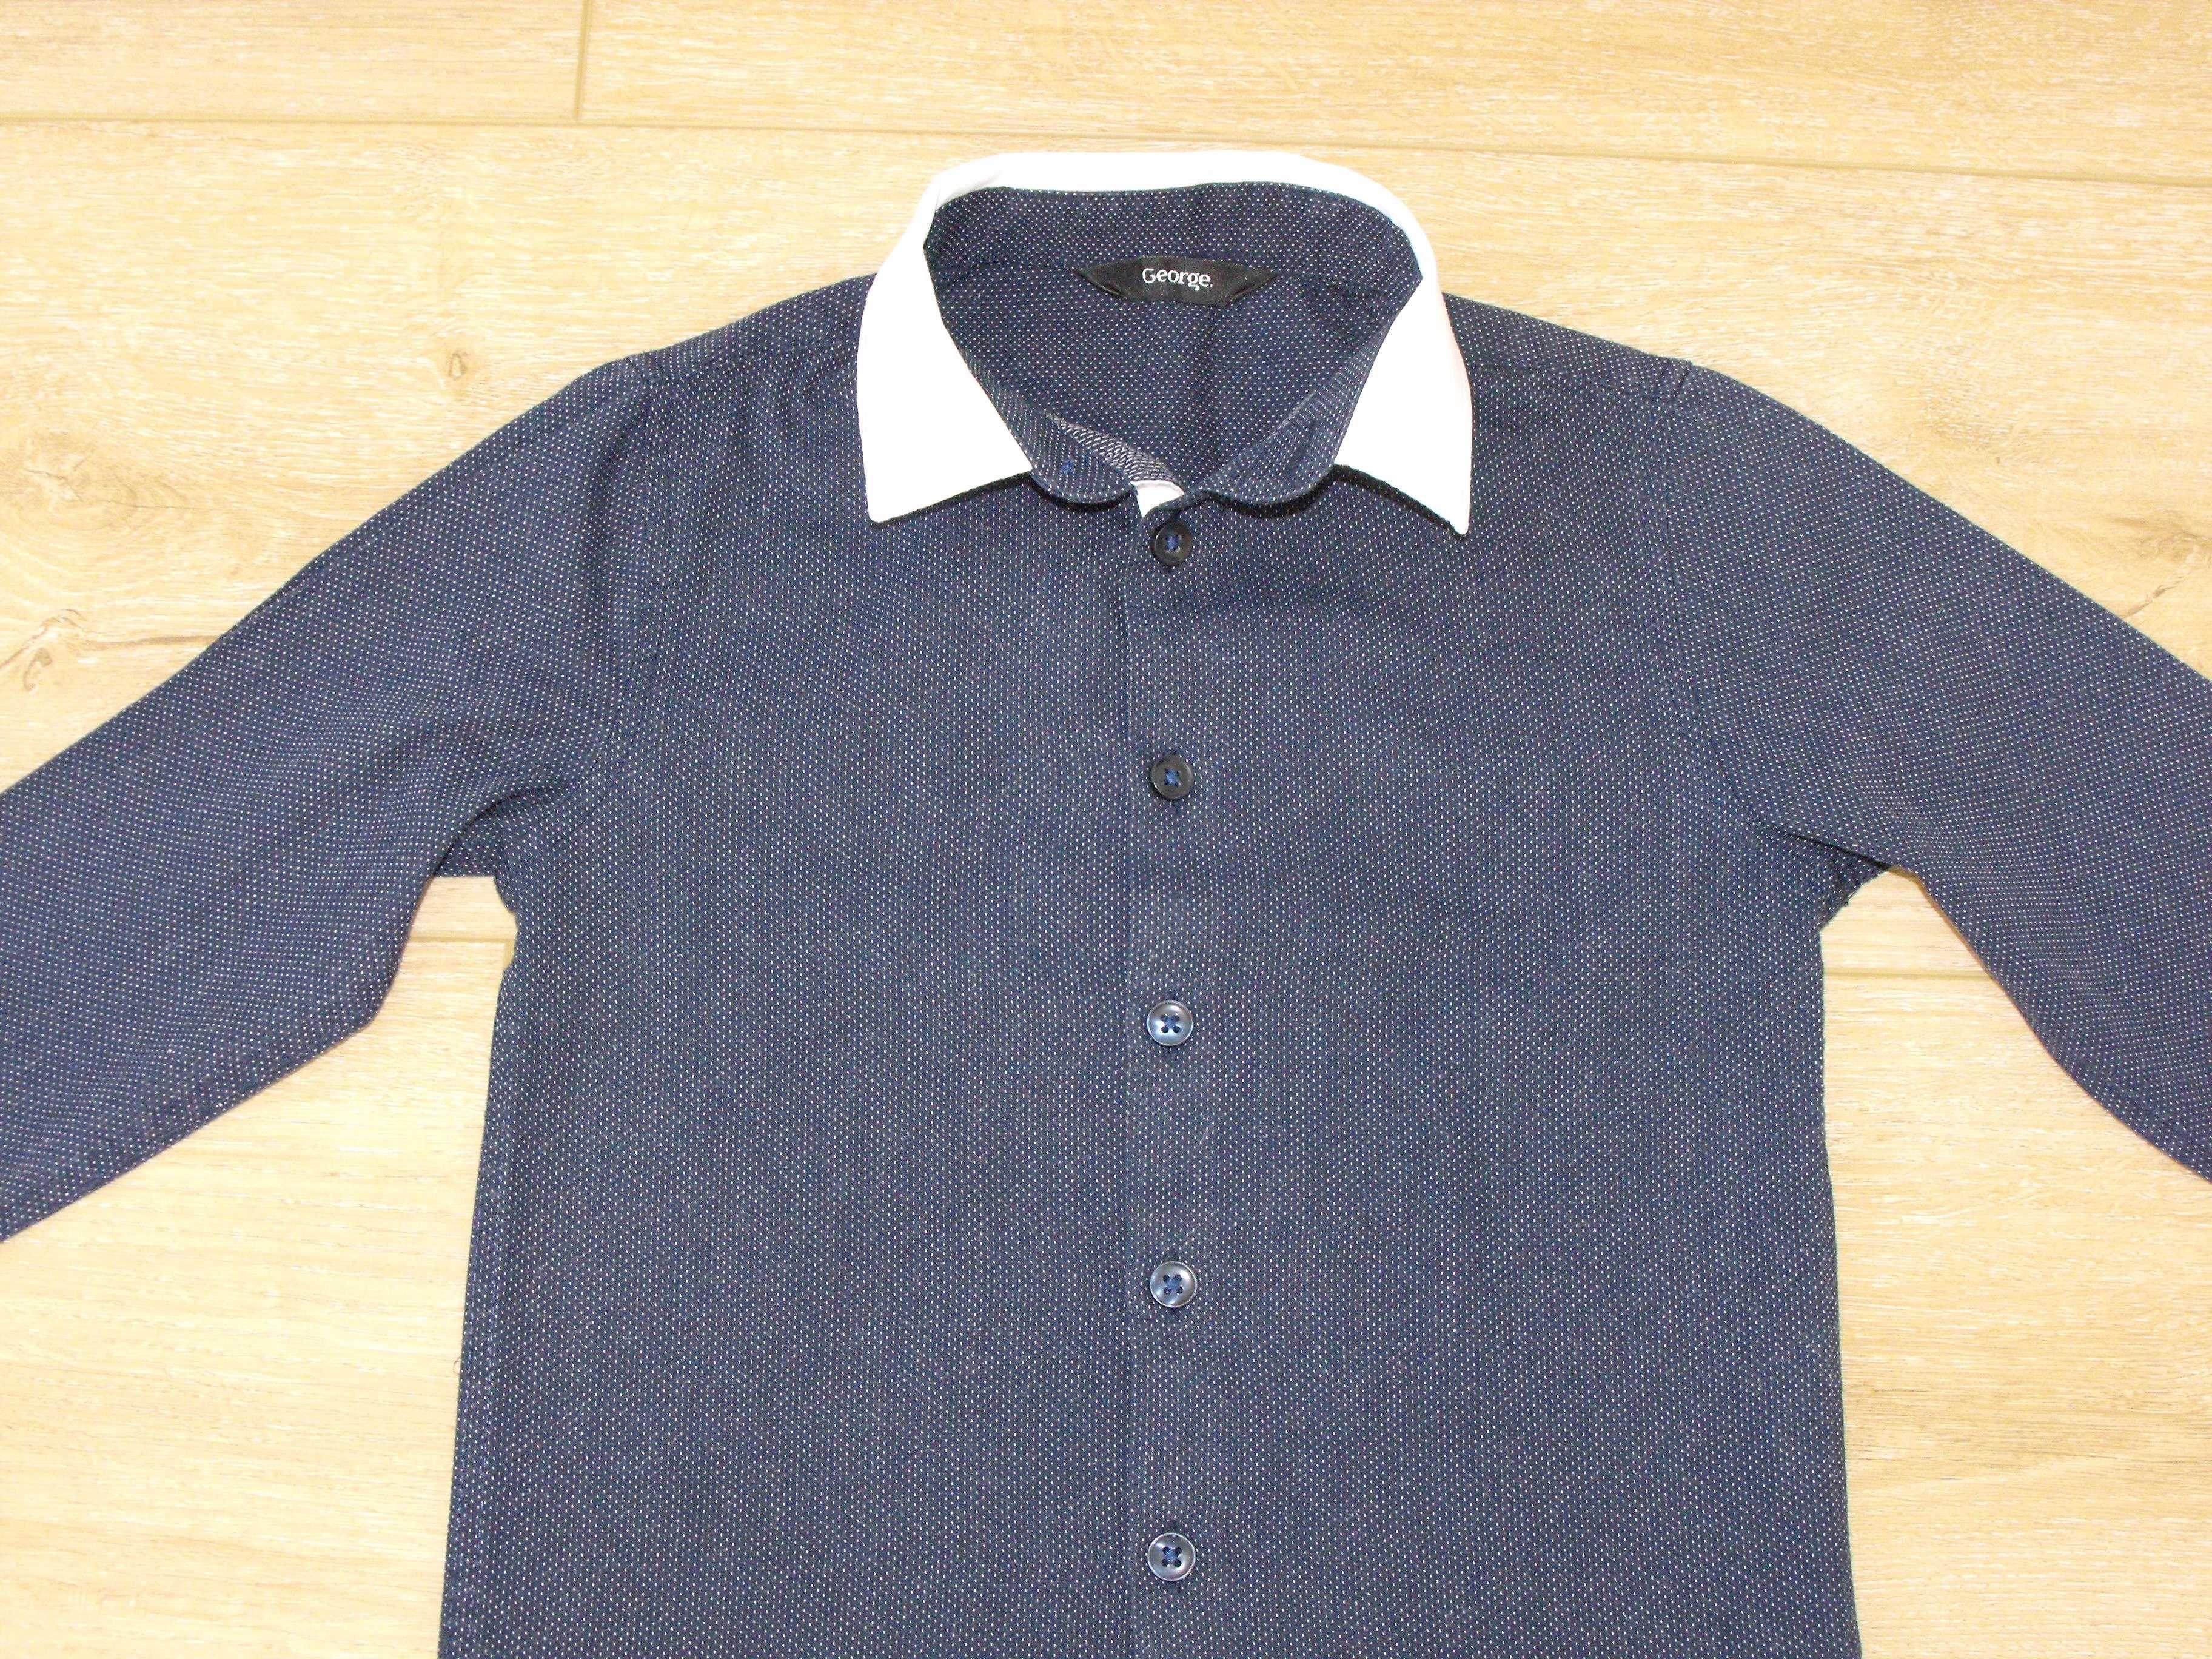 Elegancka Koszula dla Chłopca George r. 98-104 cm